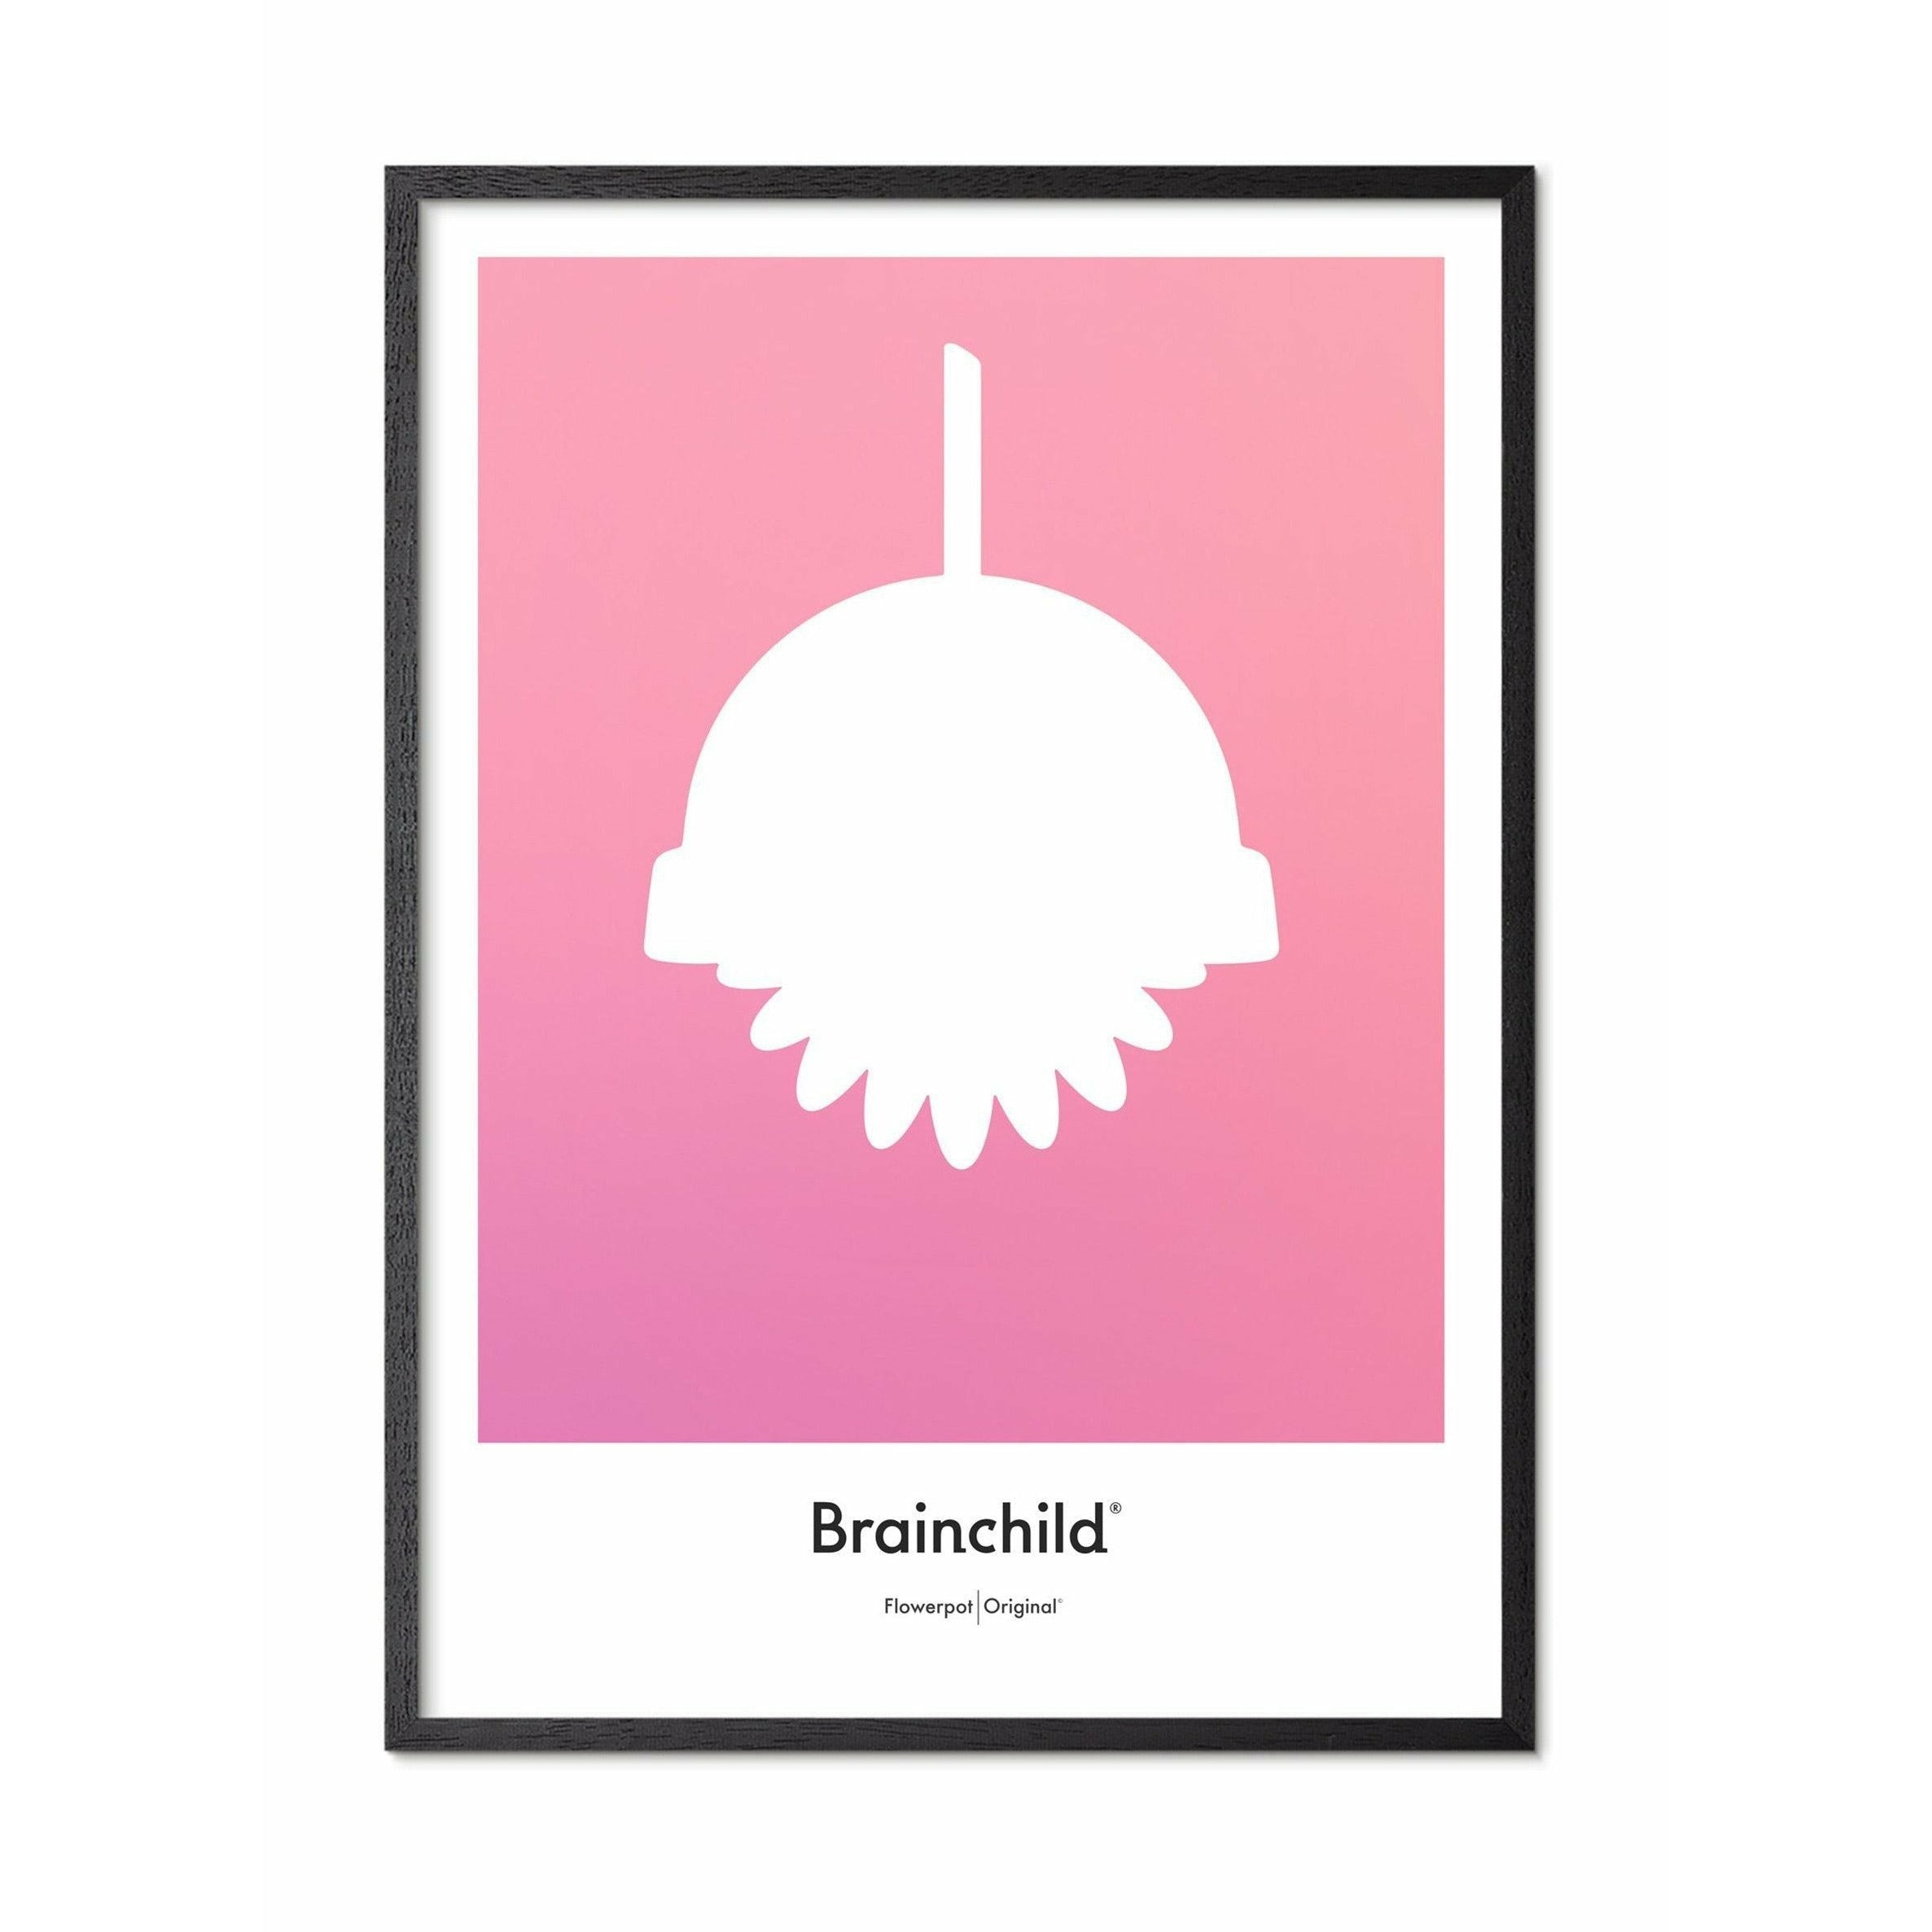 Brainchild Blumentopf Design Icon Poster, schwarz lackiertem Holzrahmen A5, rosa